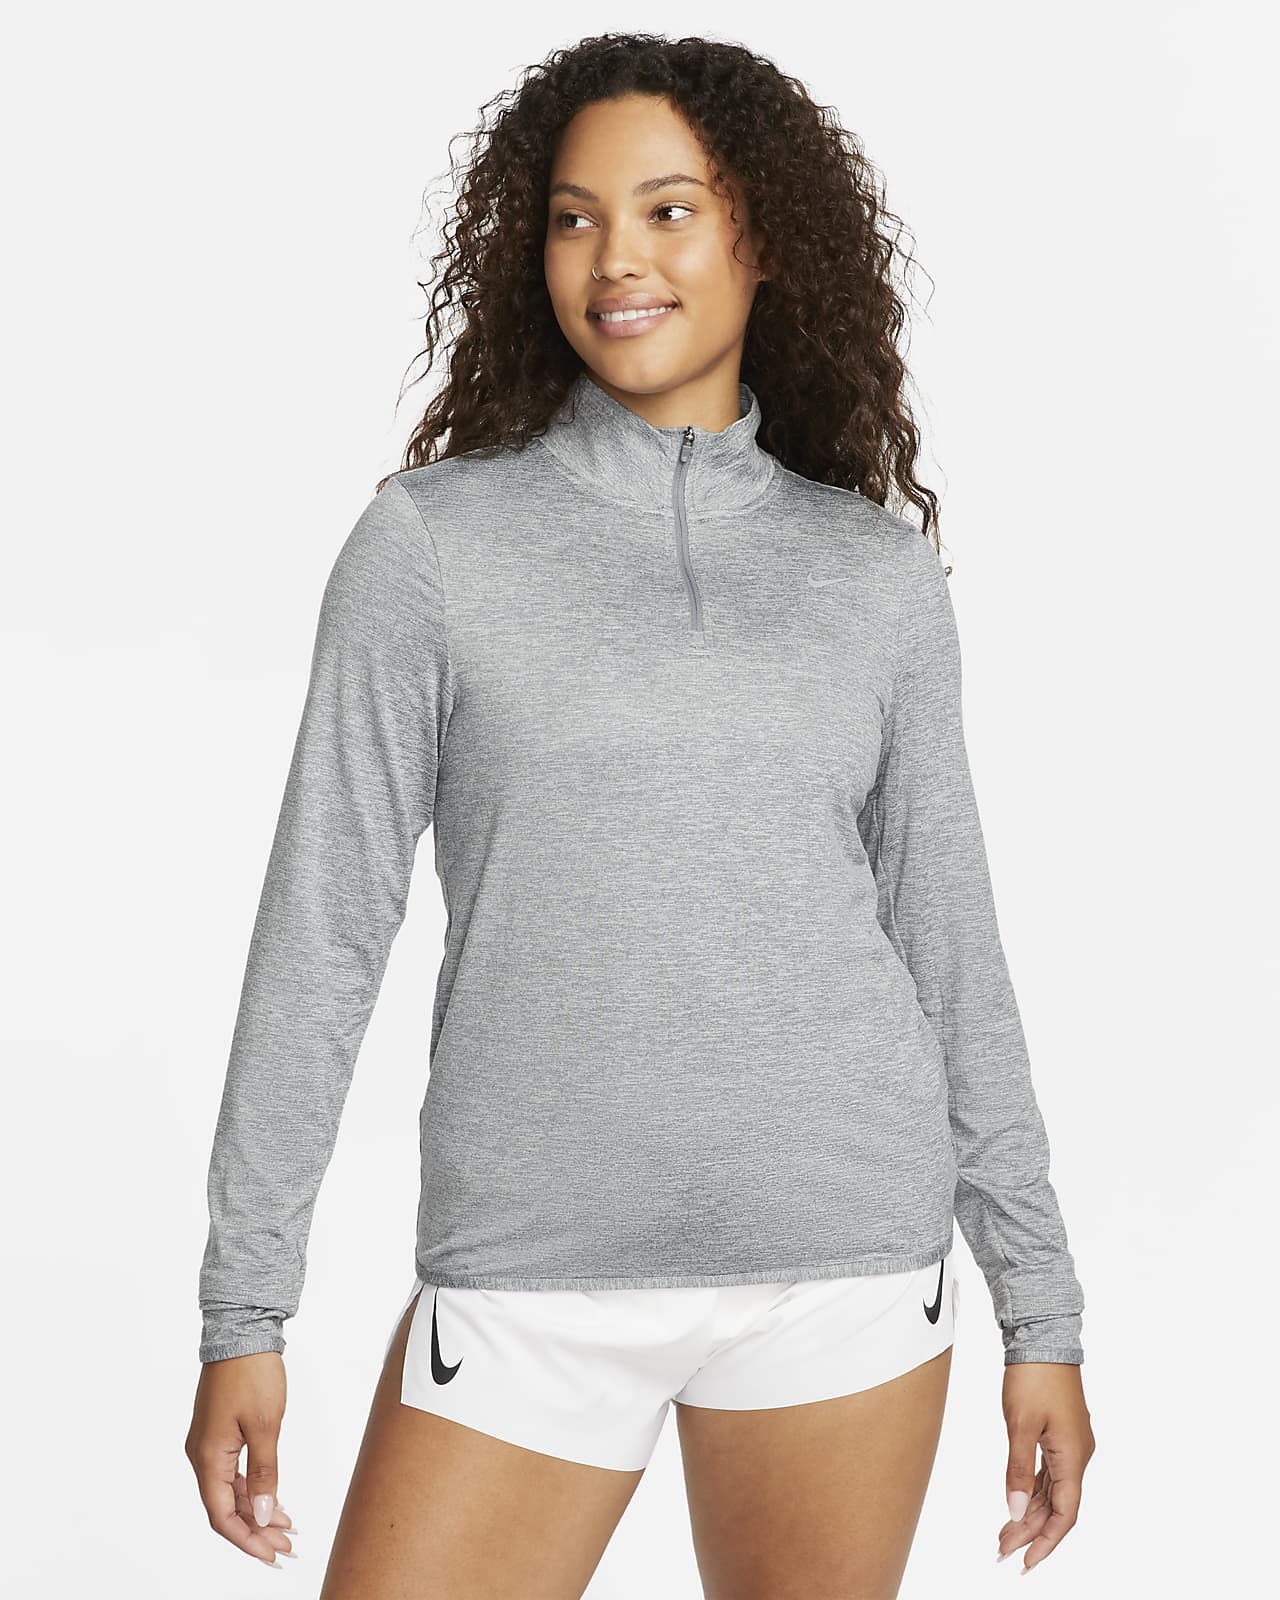 Nike Swift Element Women's UV Protection 1/4-Zip Running Top